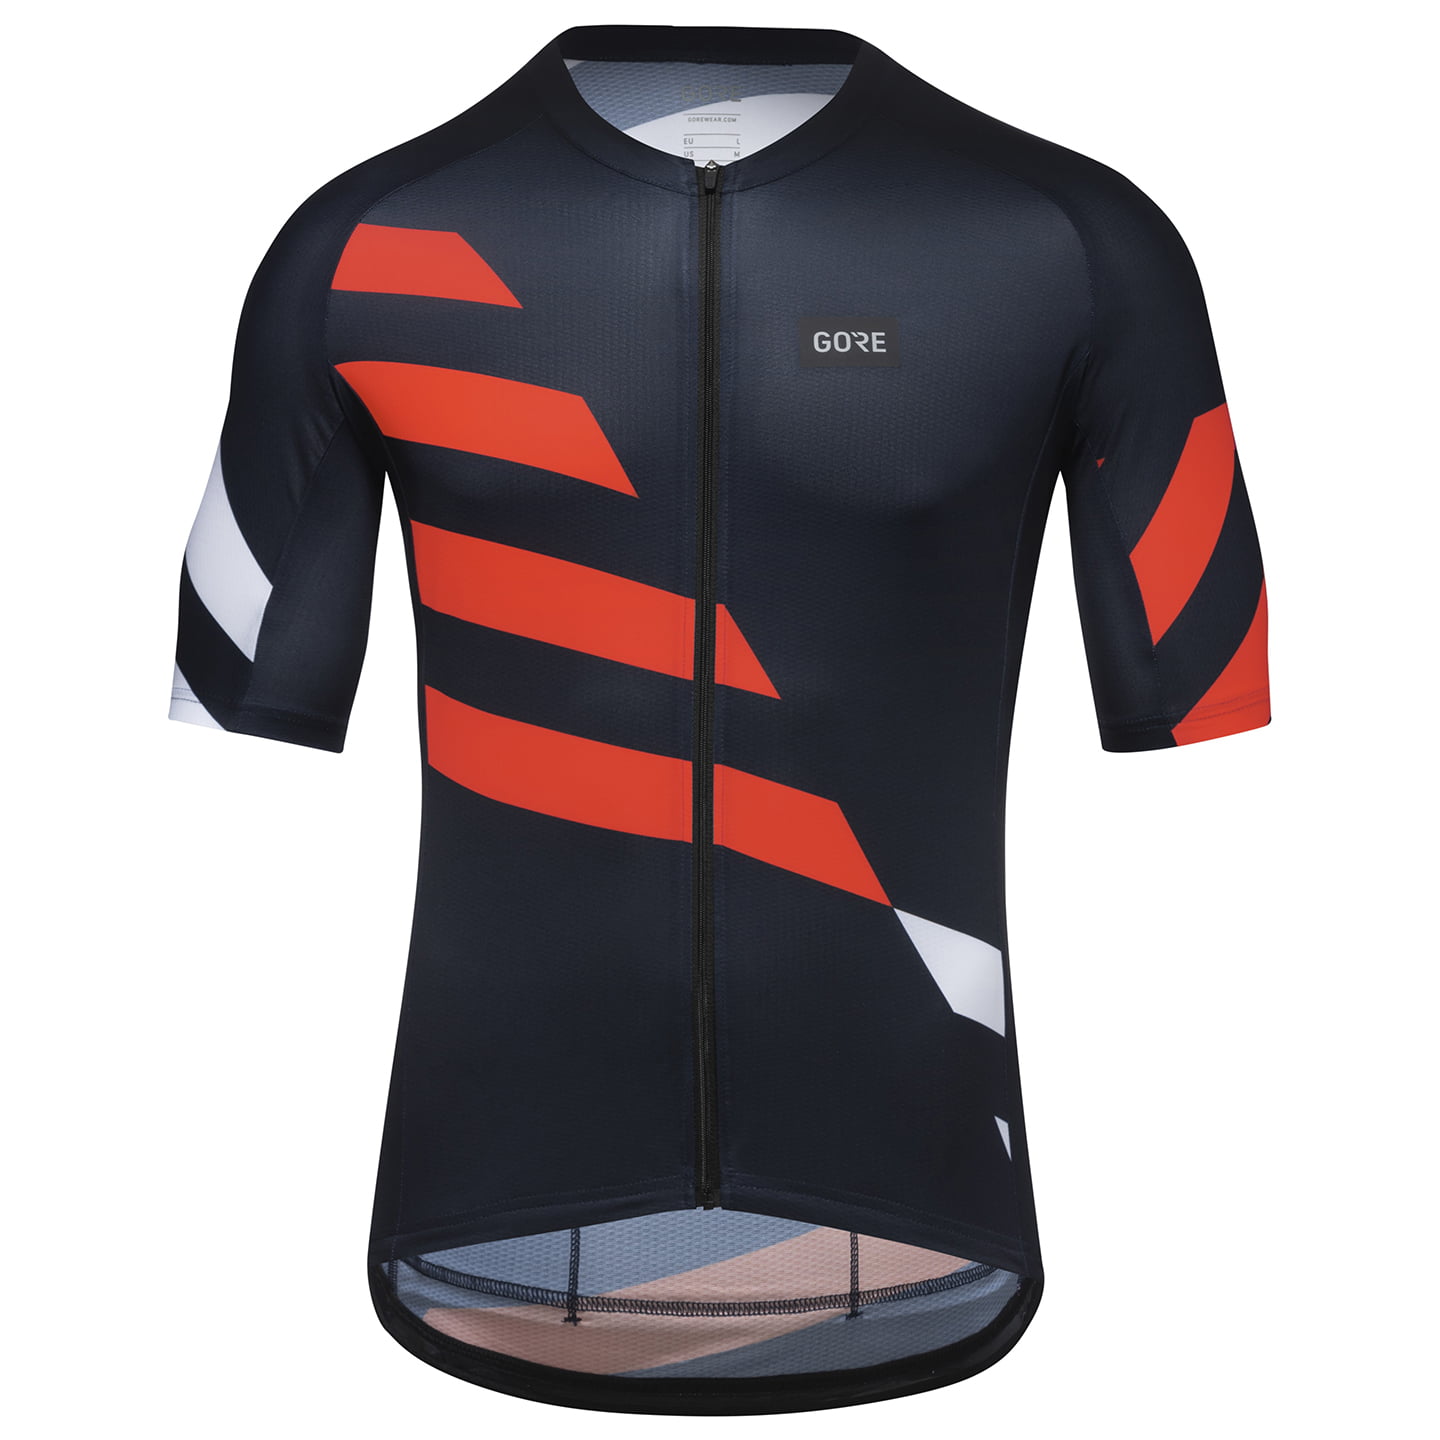 Spirit Signal Chaos Short Sleeve Jersey Short Sleeve Jersey, for men, size 2XL, Cycling jersey, Cycle clothing